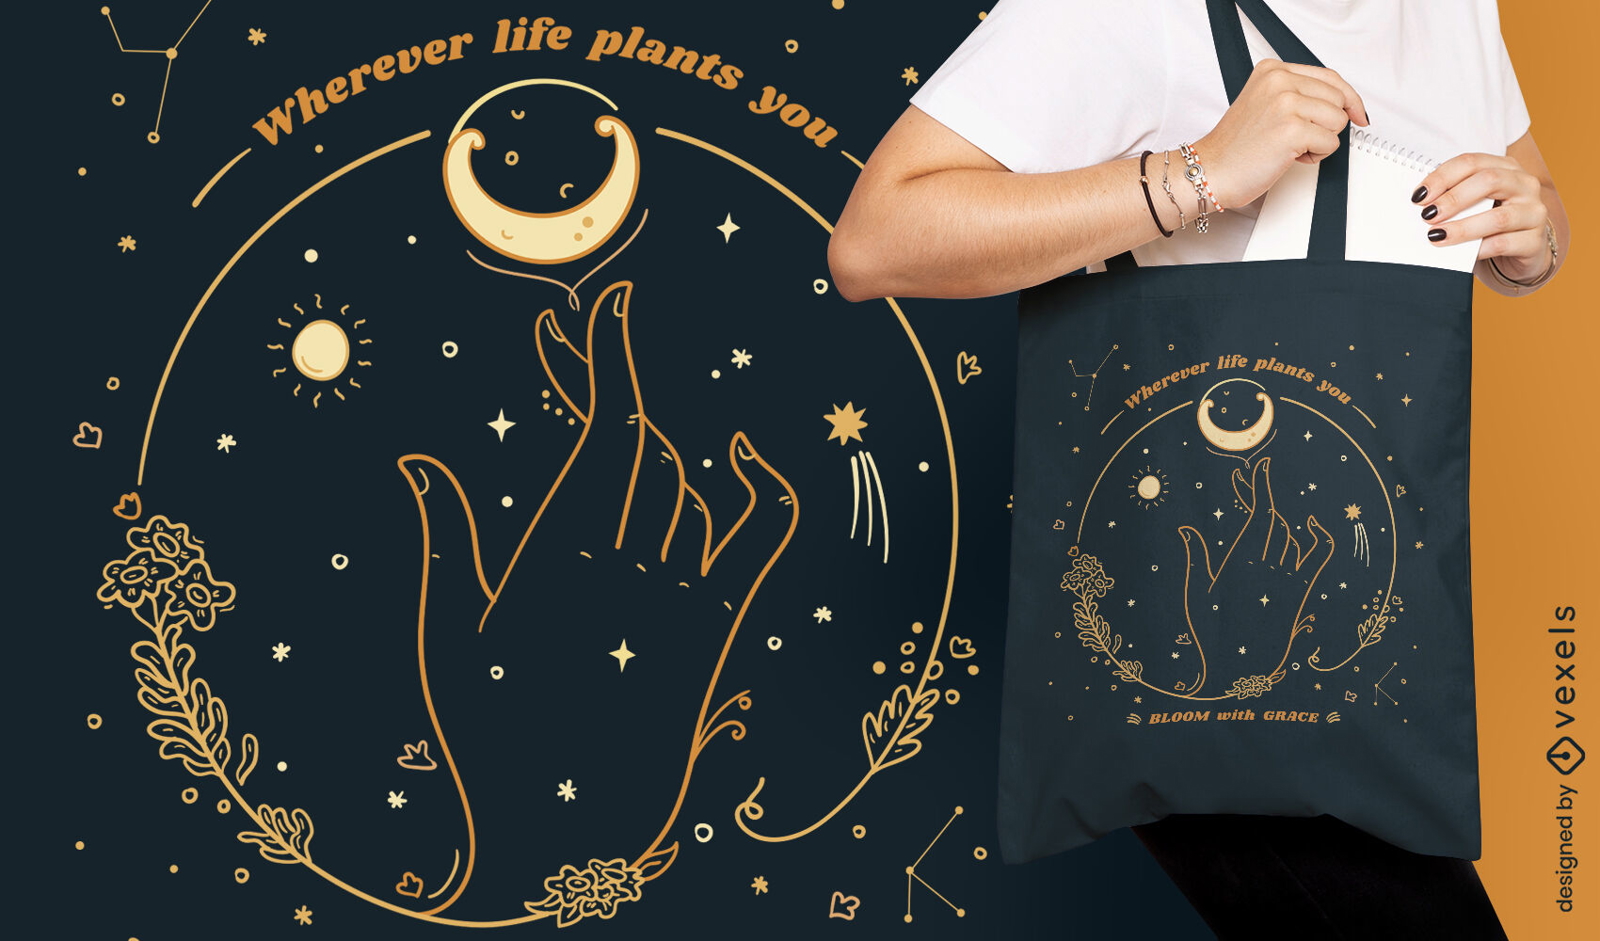 Esoteric life moon tote bag design